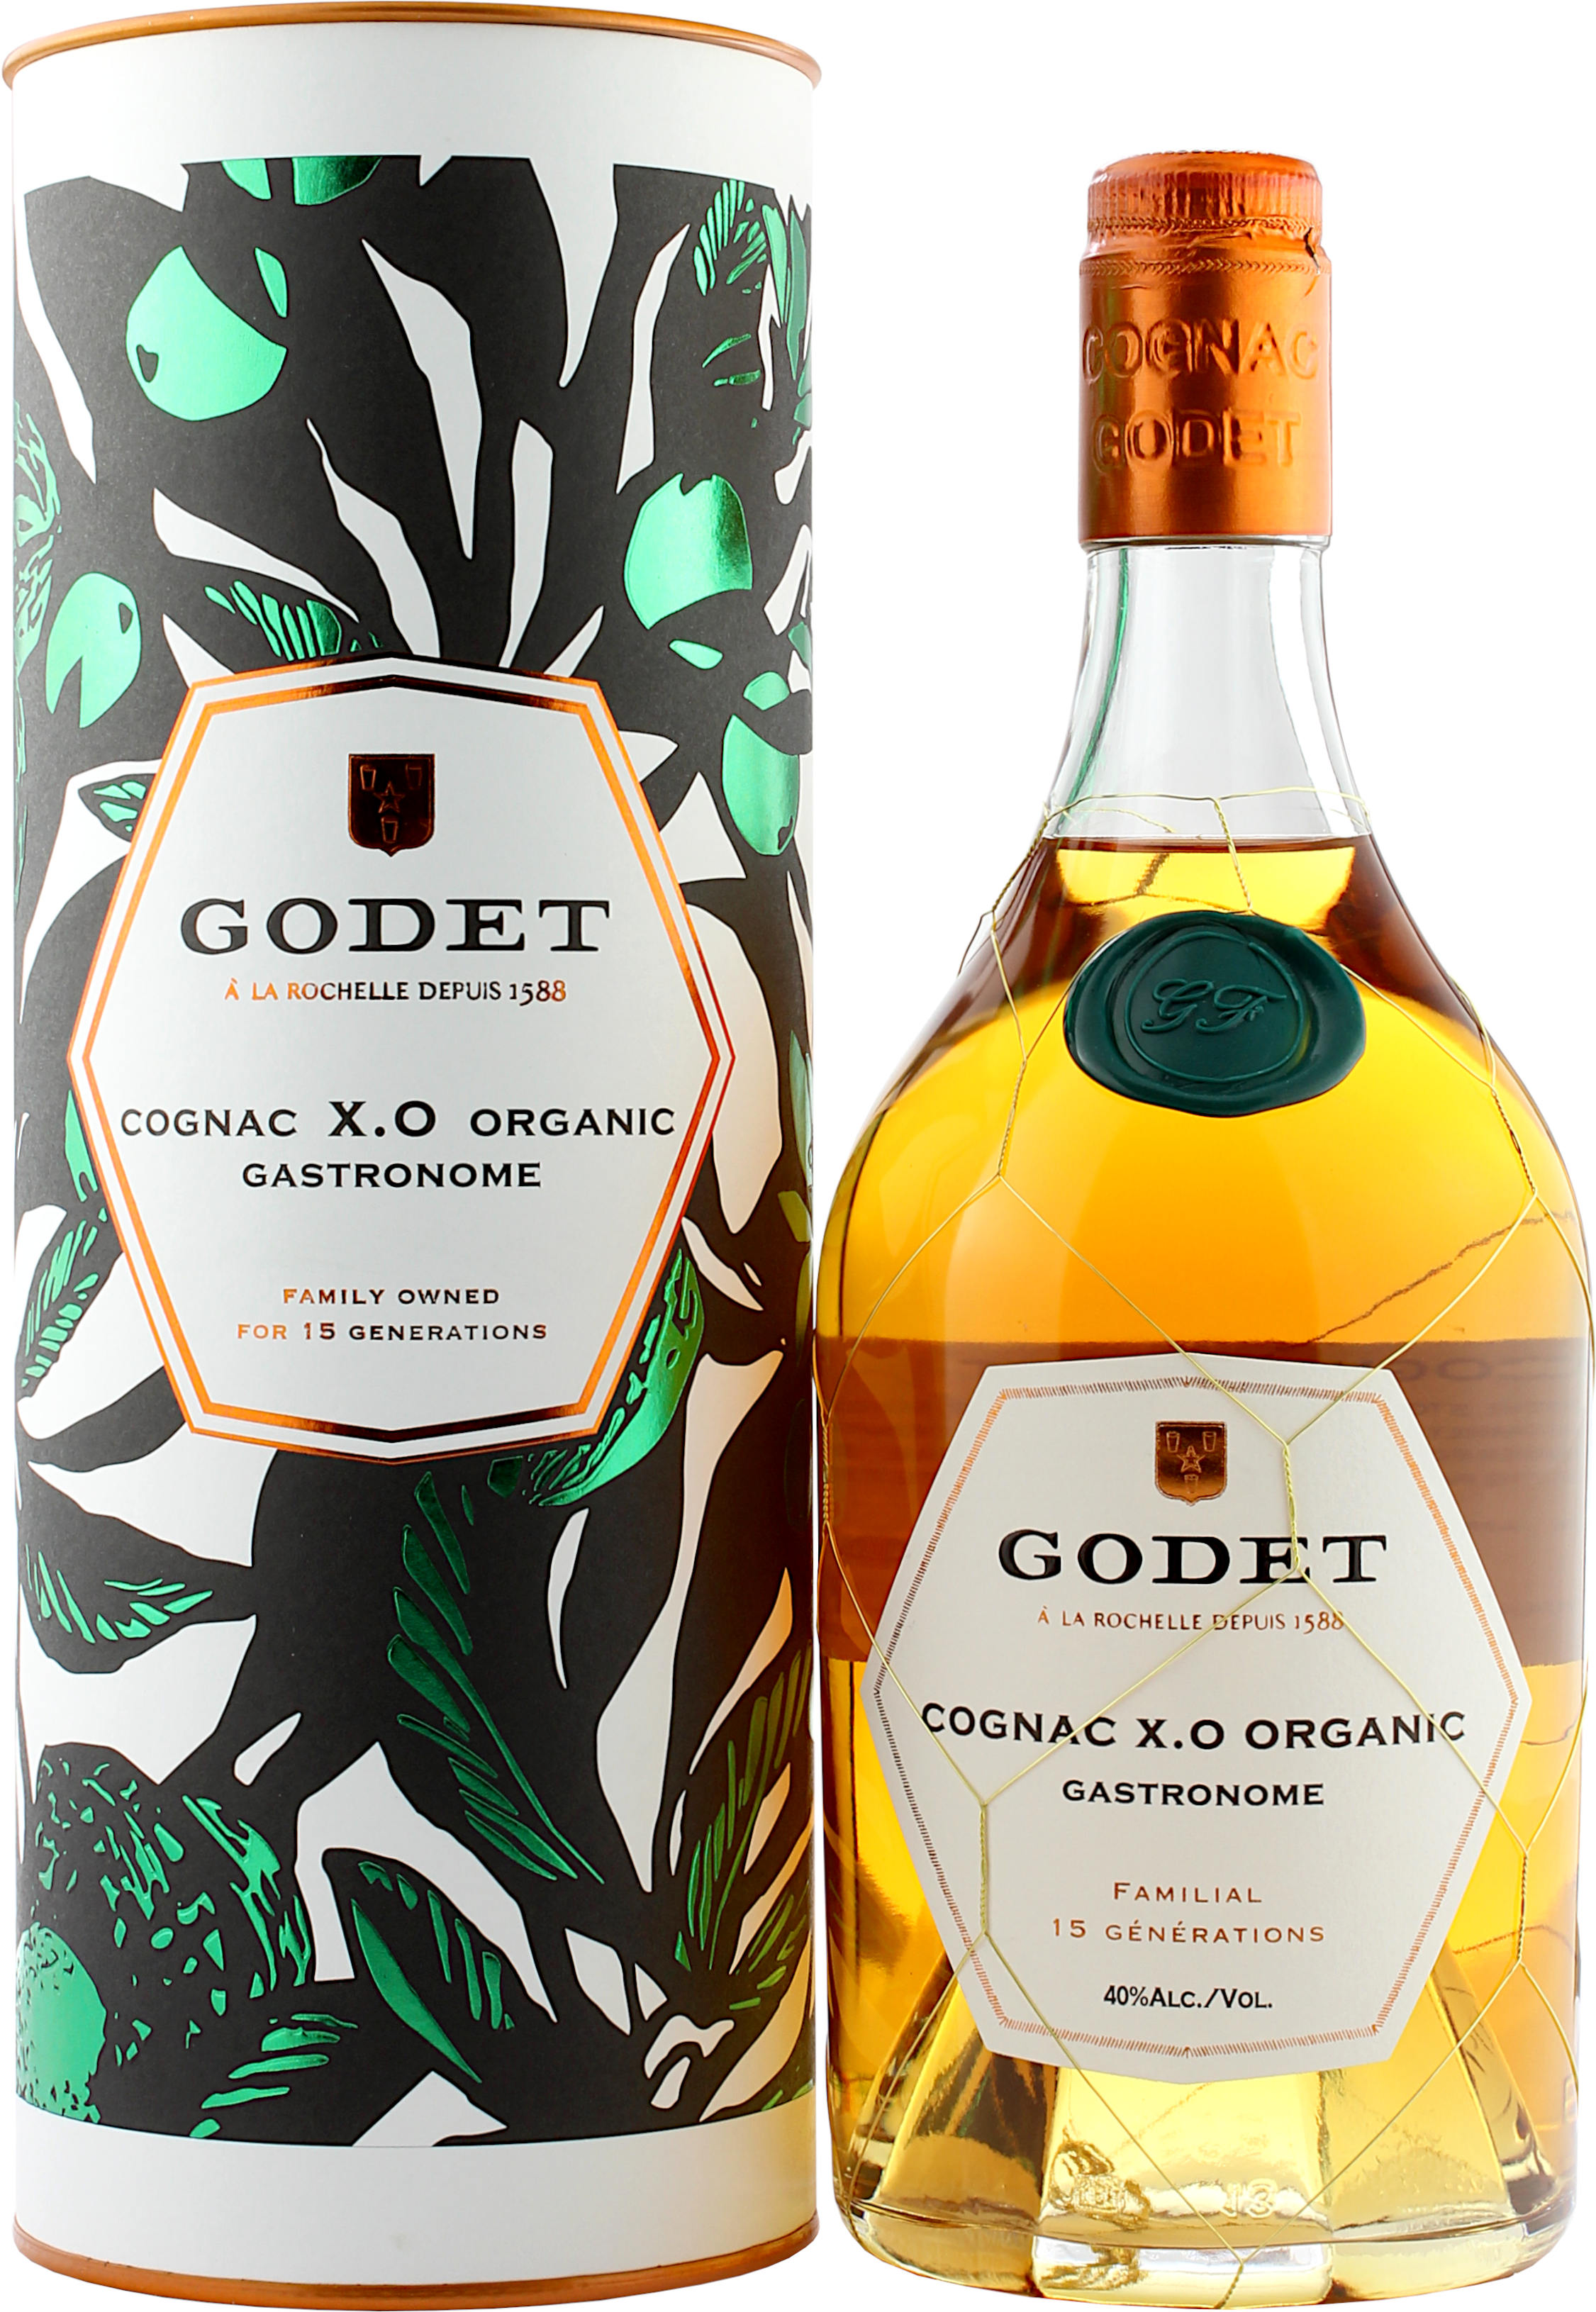 Godet Cognac XO Organic Gastronomie 40.0% 0,7l (bio)